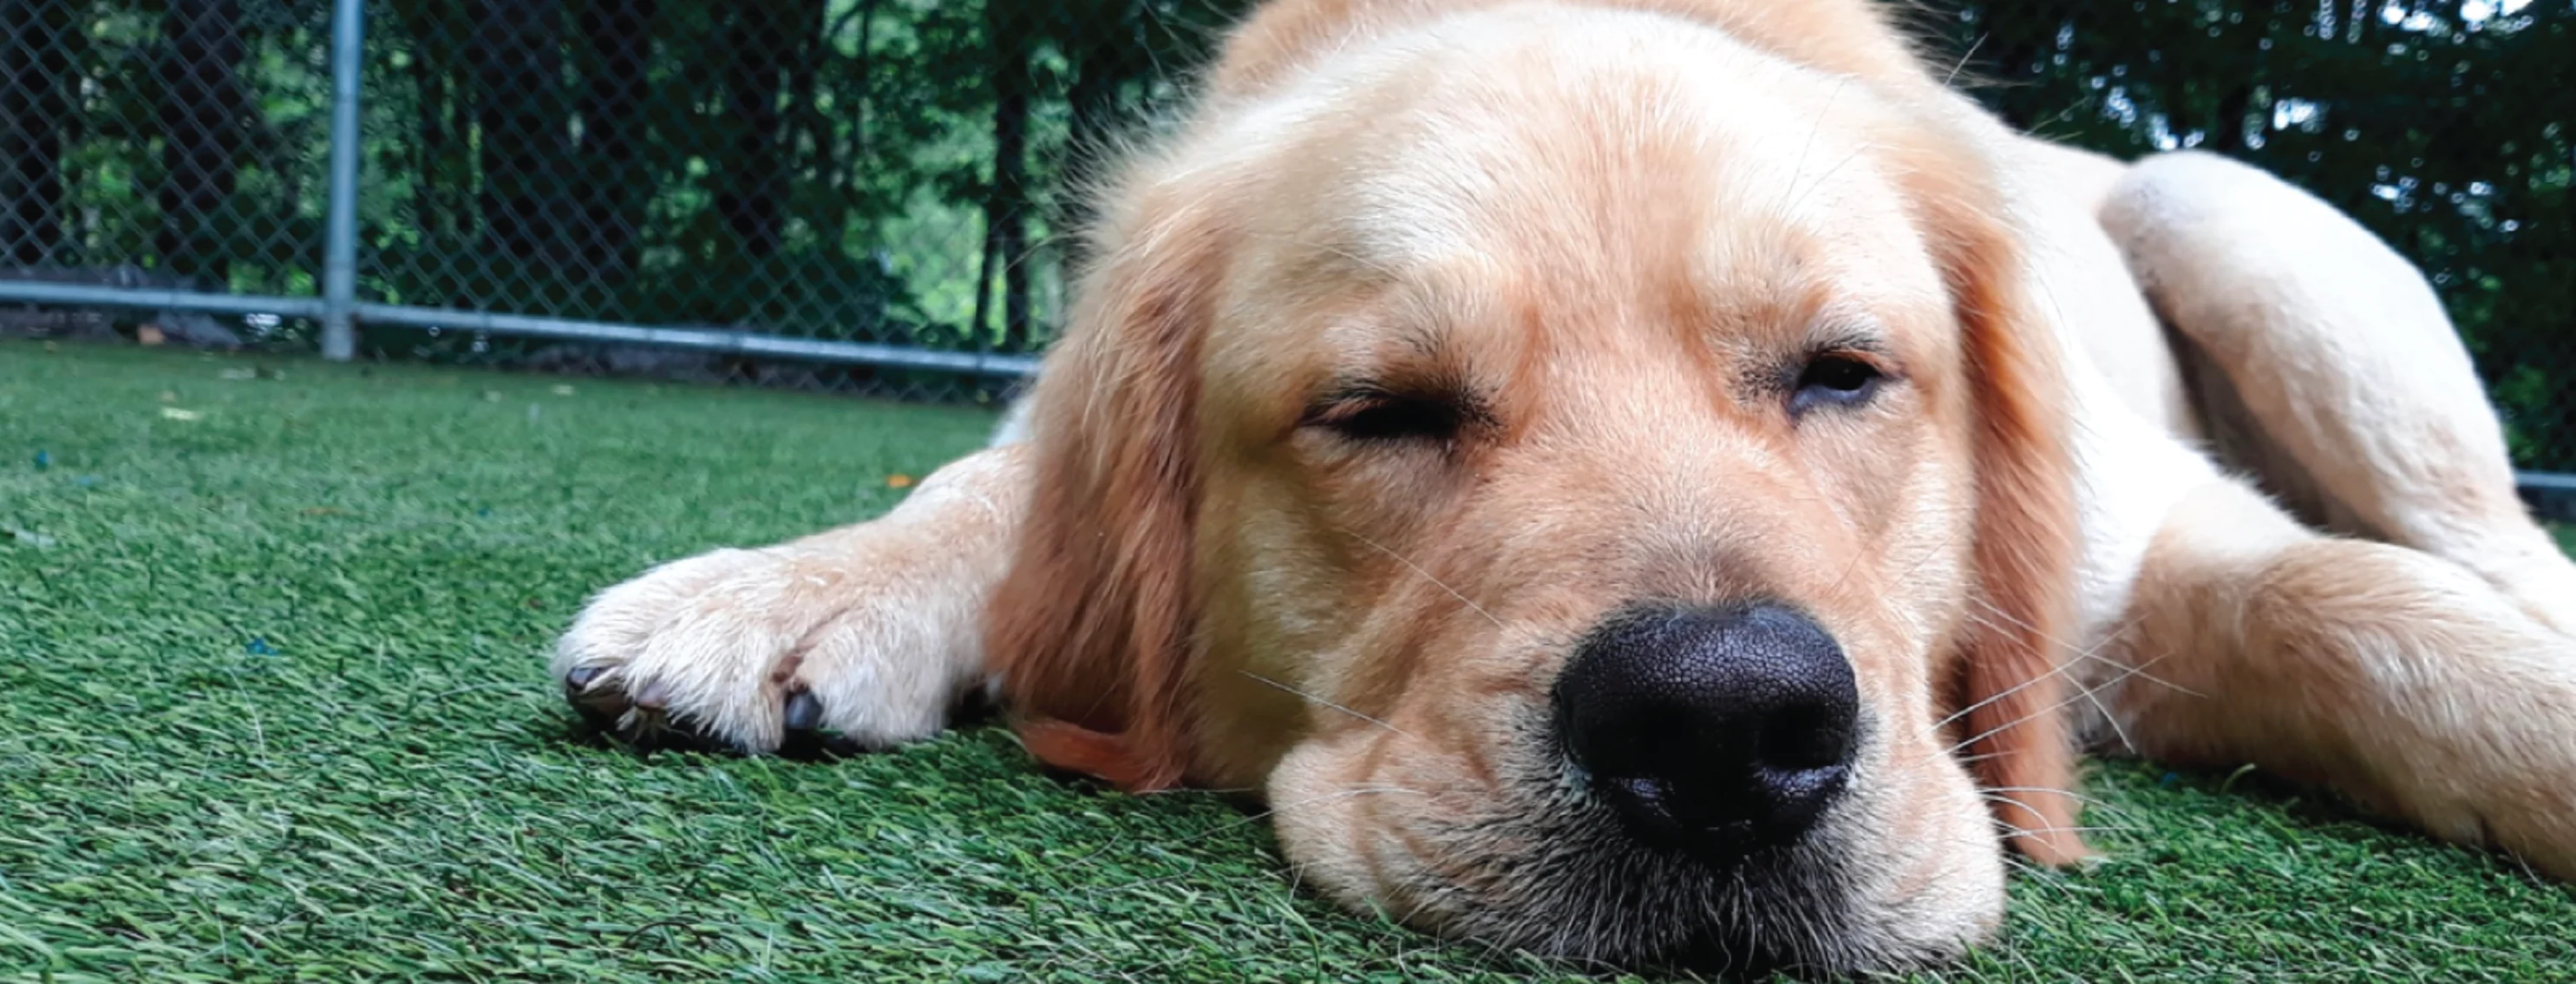 Dog laying down sleeping on grass